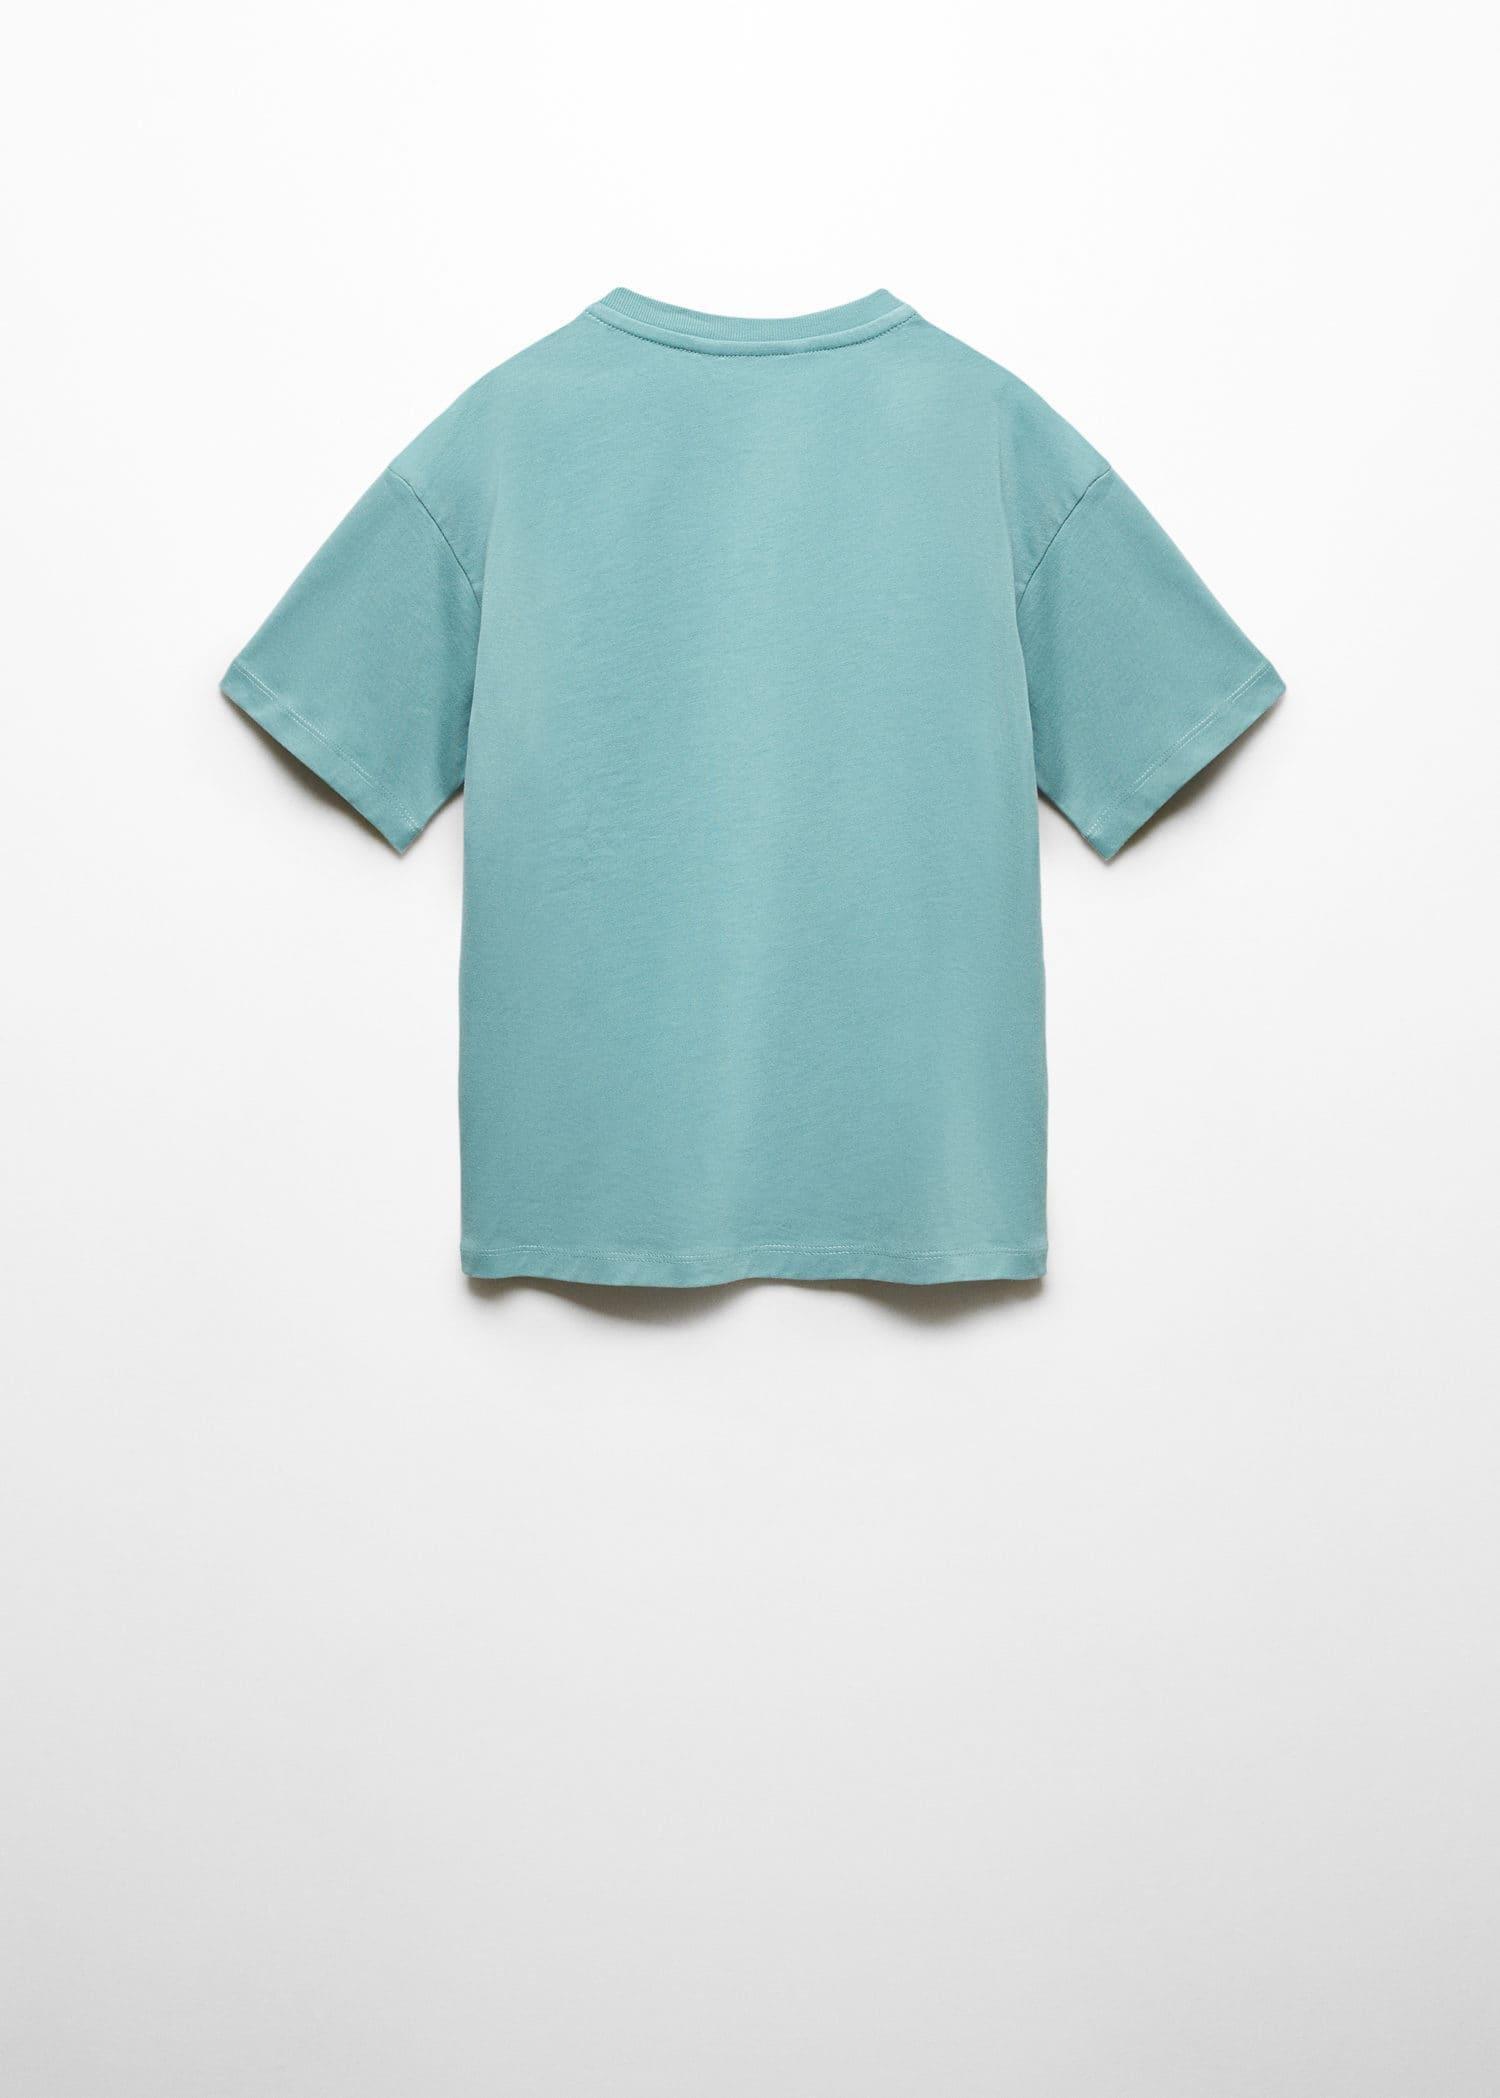 Mango - Green Printed Cotton T-Shirt, Kids Boys